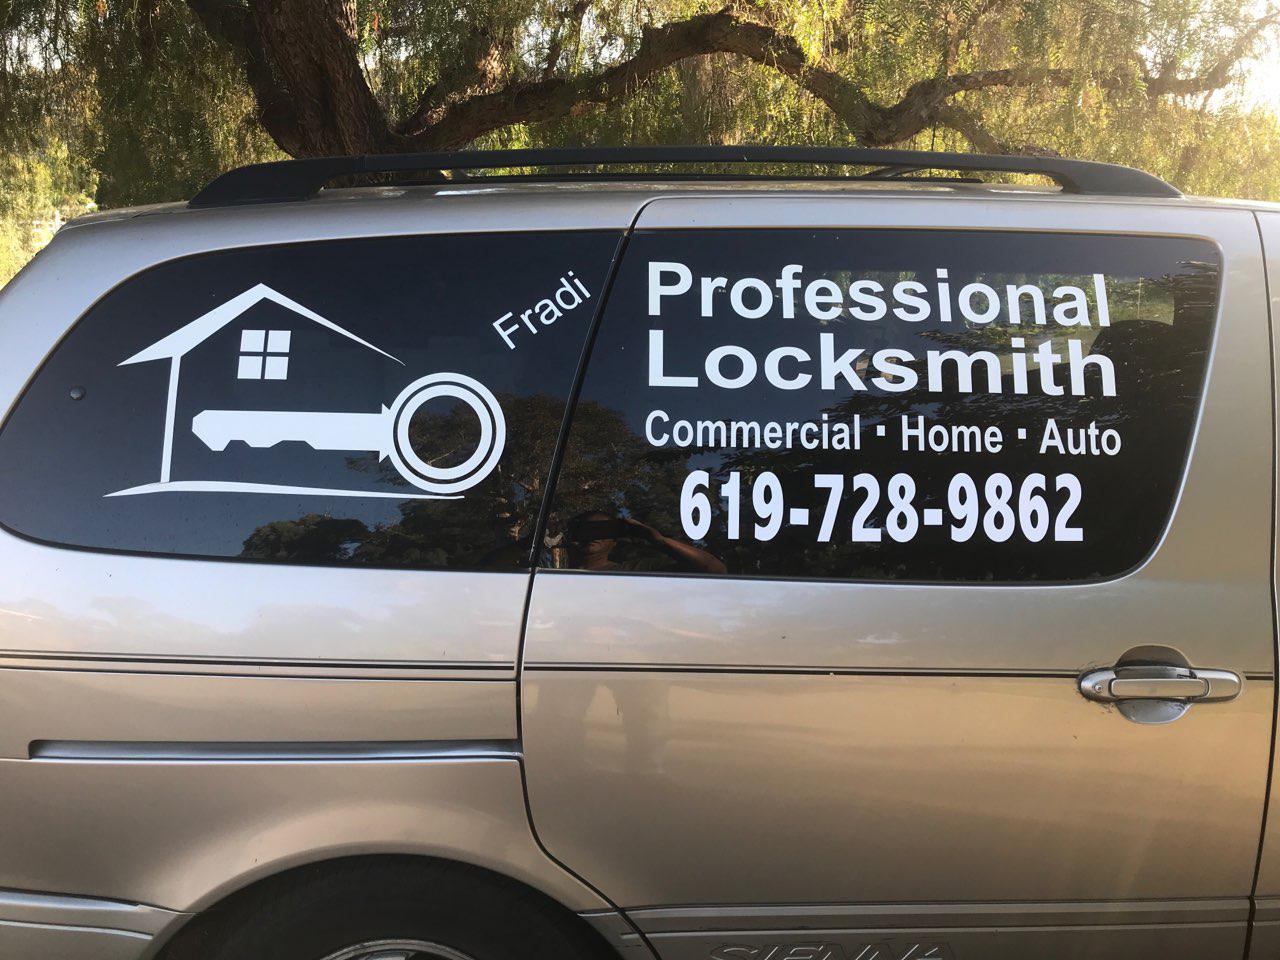 Fradi Professional Locksmith Services